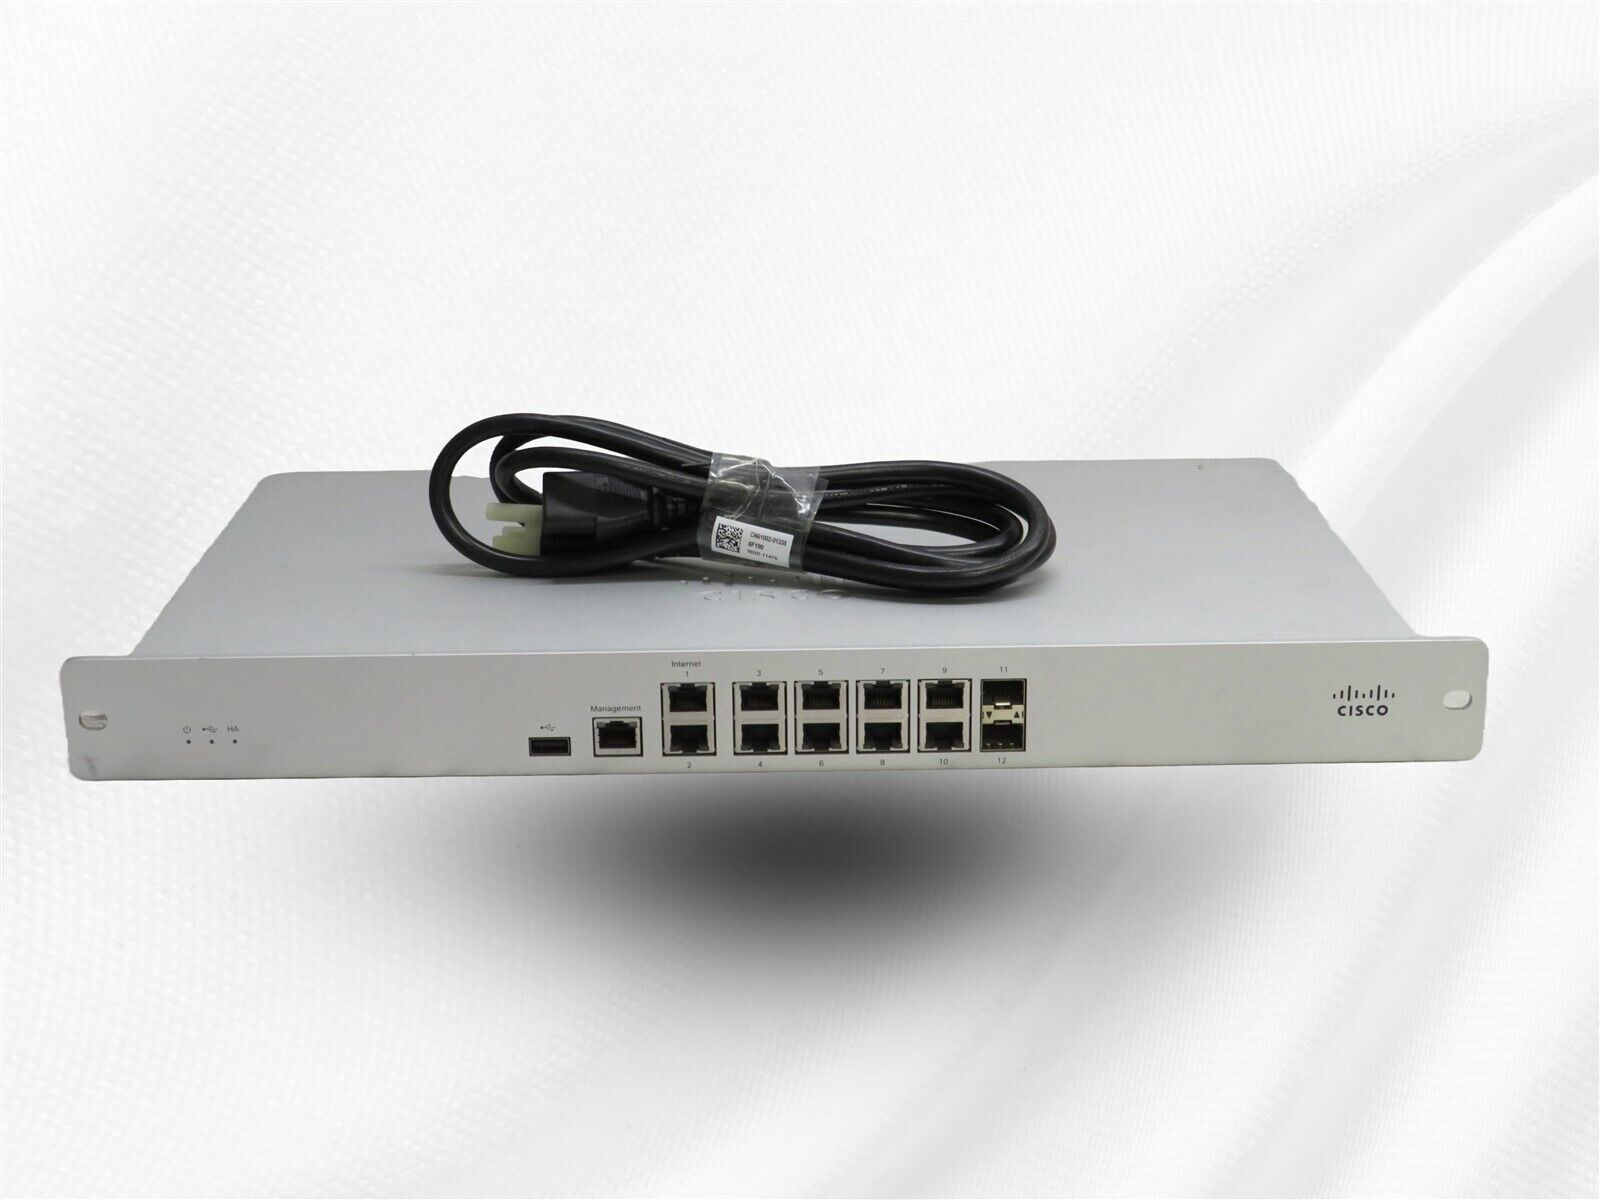 Cisco Meraki MX84 Cloud Managed Security Firewall Appliance UNCLAIMED MX84-HW 